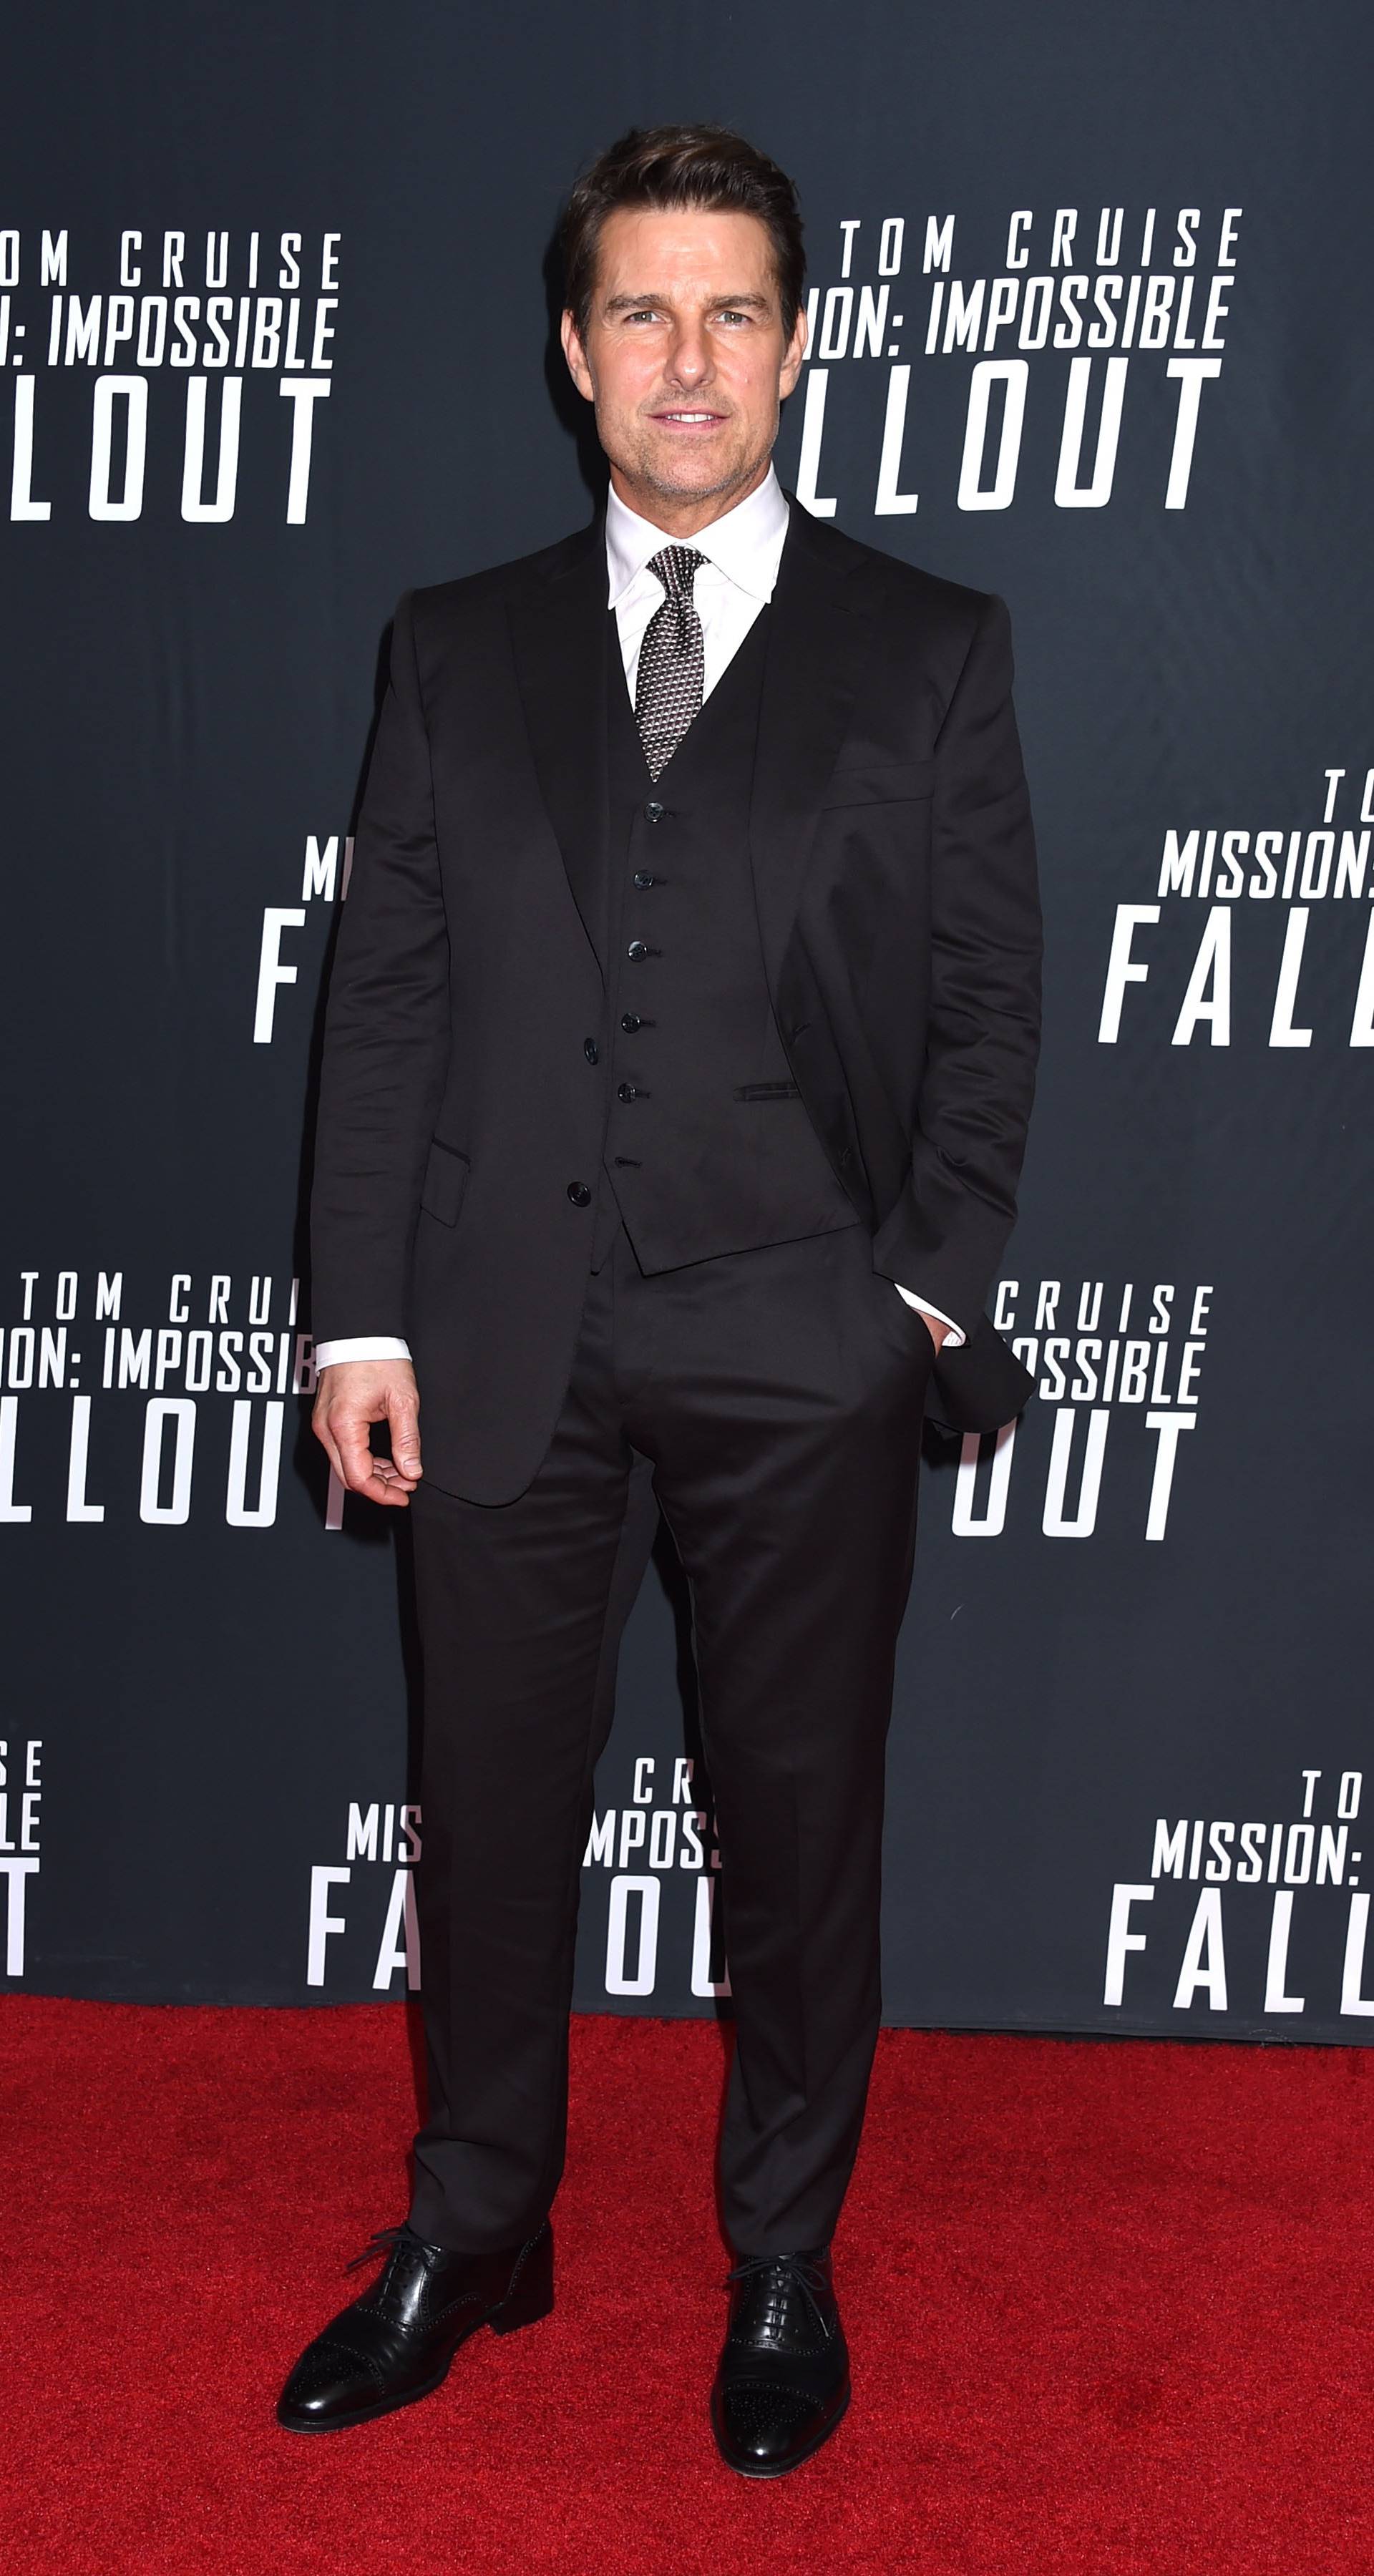 Mission: Impossible Fallout Premiere - Washington DC